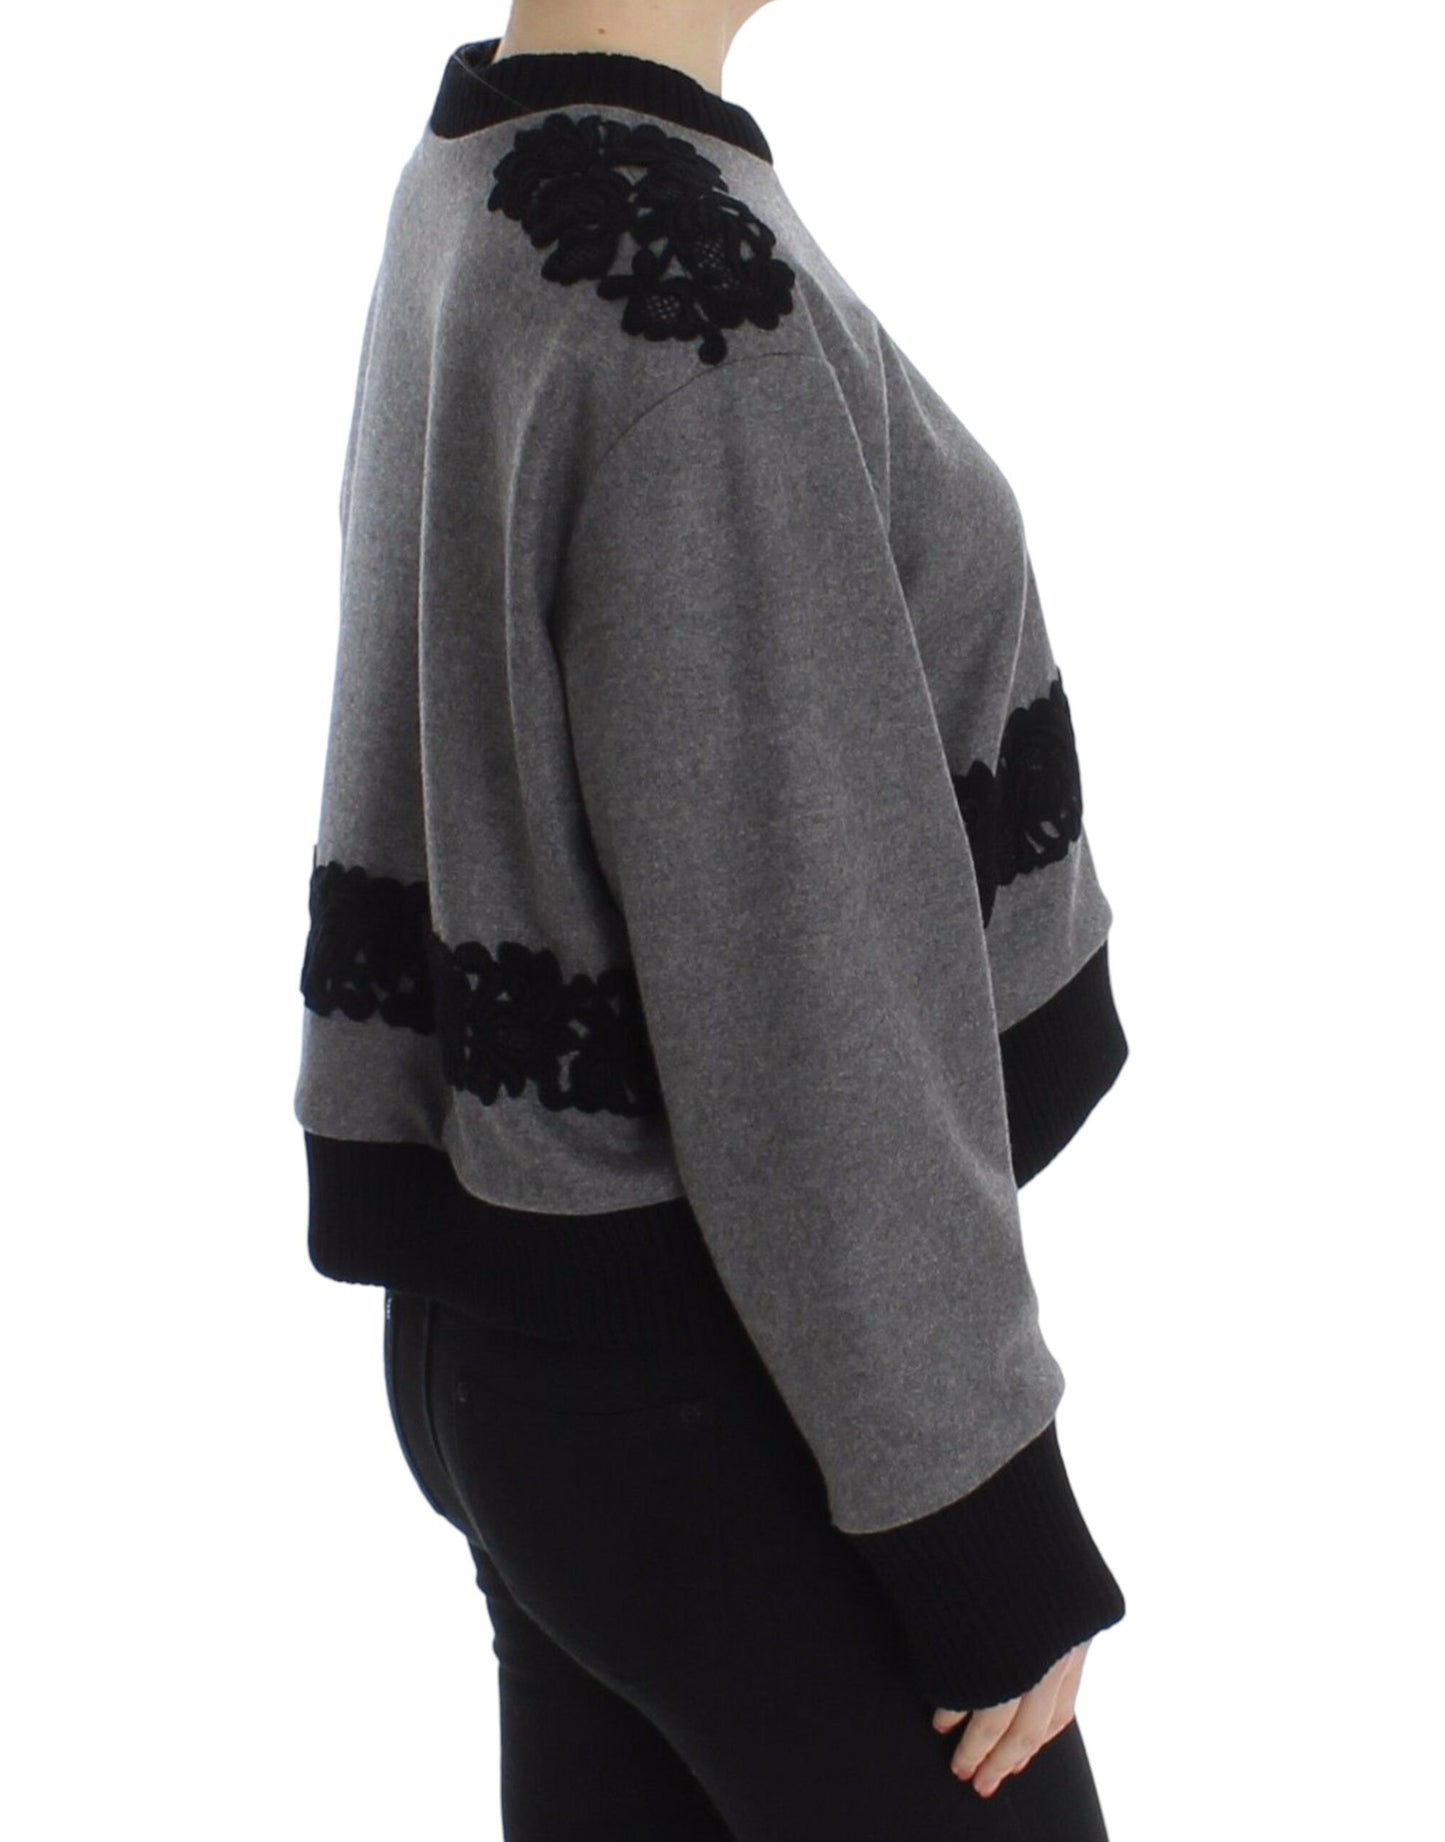 Elegant Gray Cashmere Blend Lace Sweater